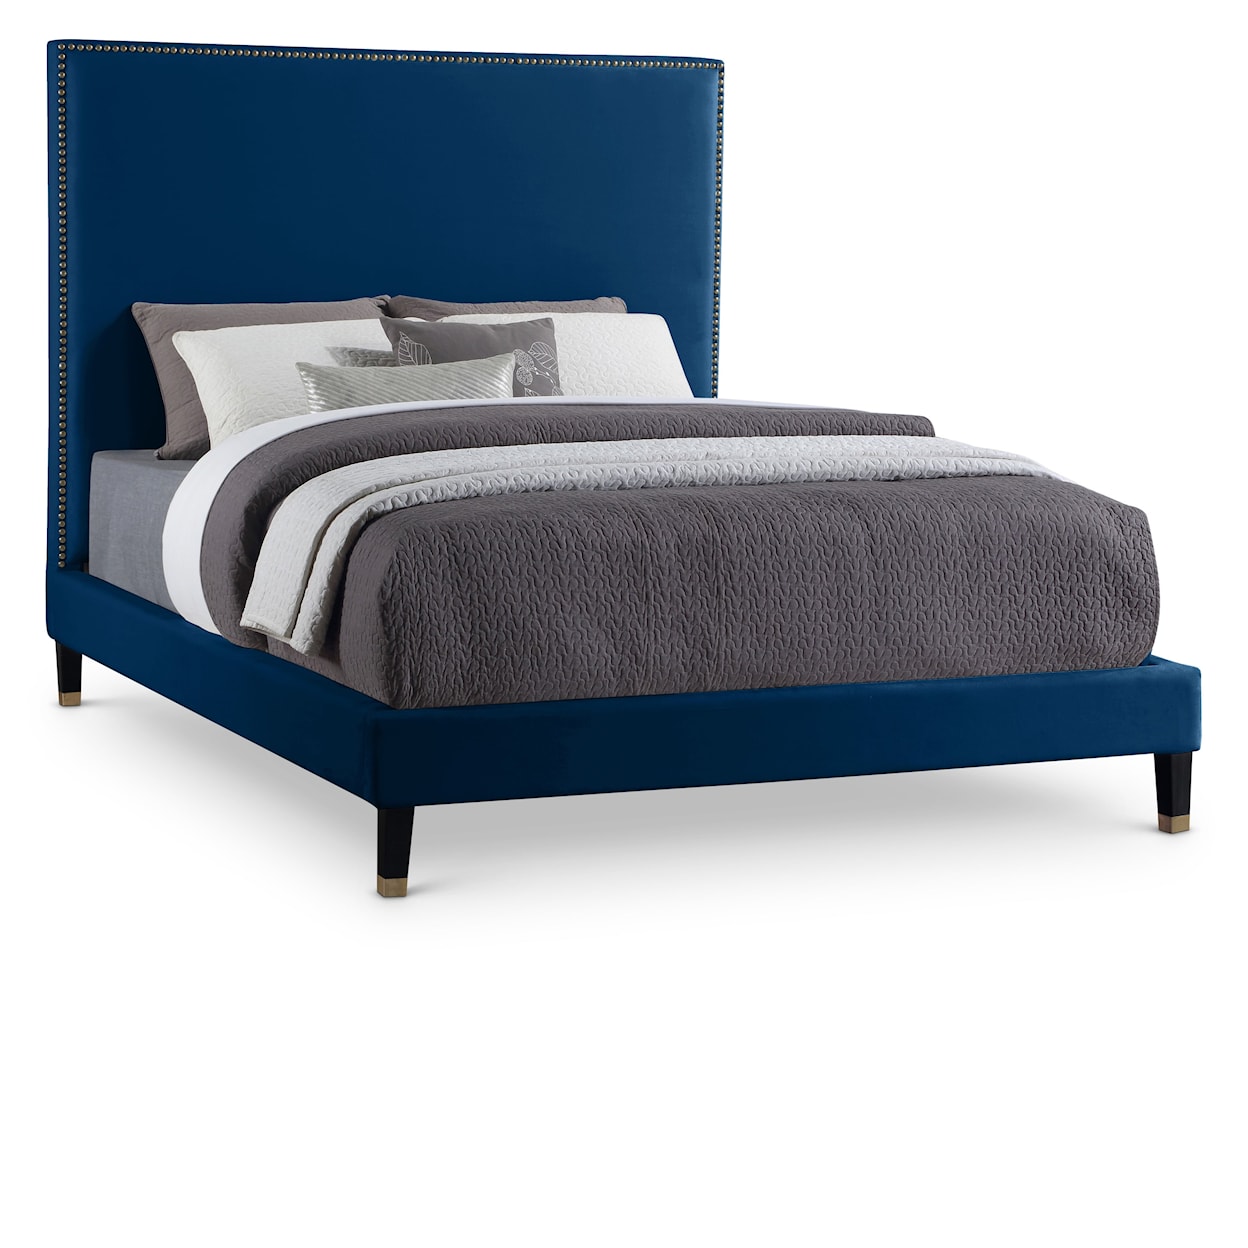 Meridian Furniture Harlie Full Bed